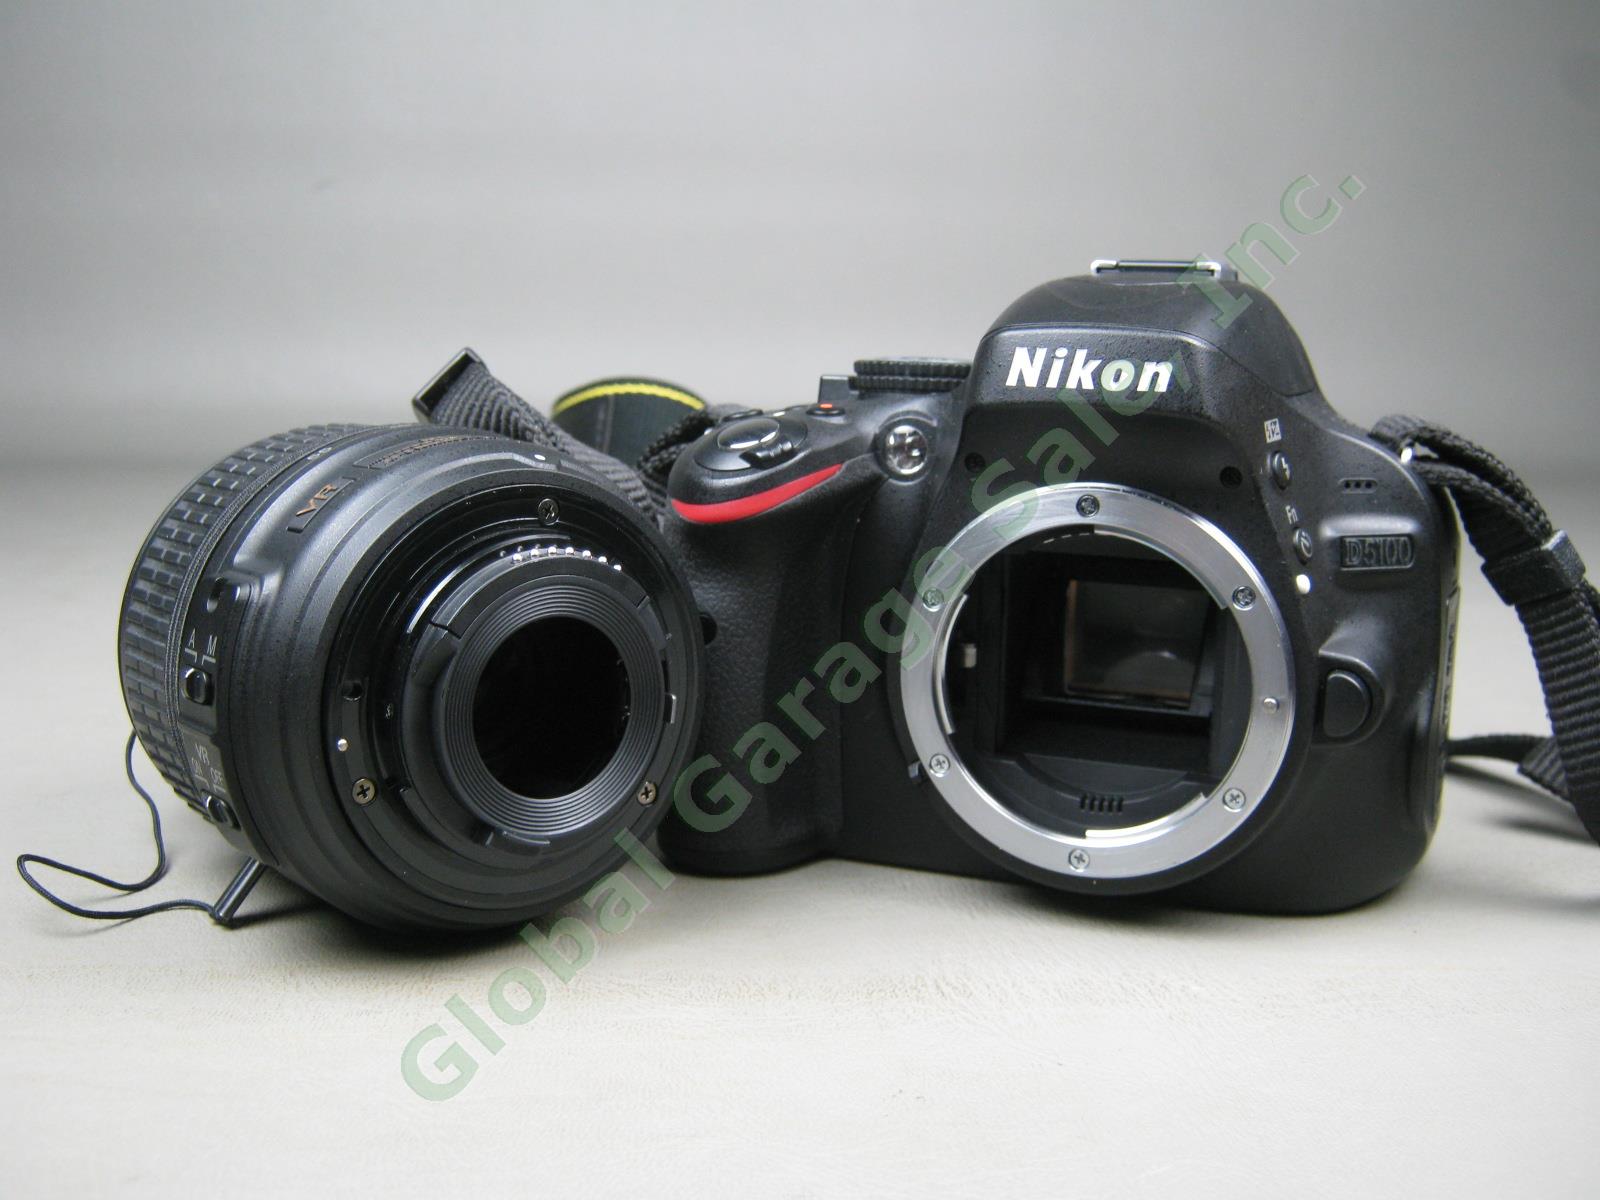 Nikon D5100 DSLR DX 18-55 VR Digital Camera Kit 2GB Manfrotto Bag Tripod Bundle 11